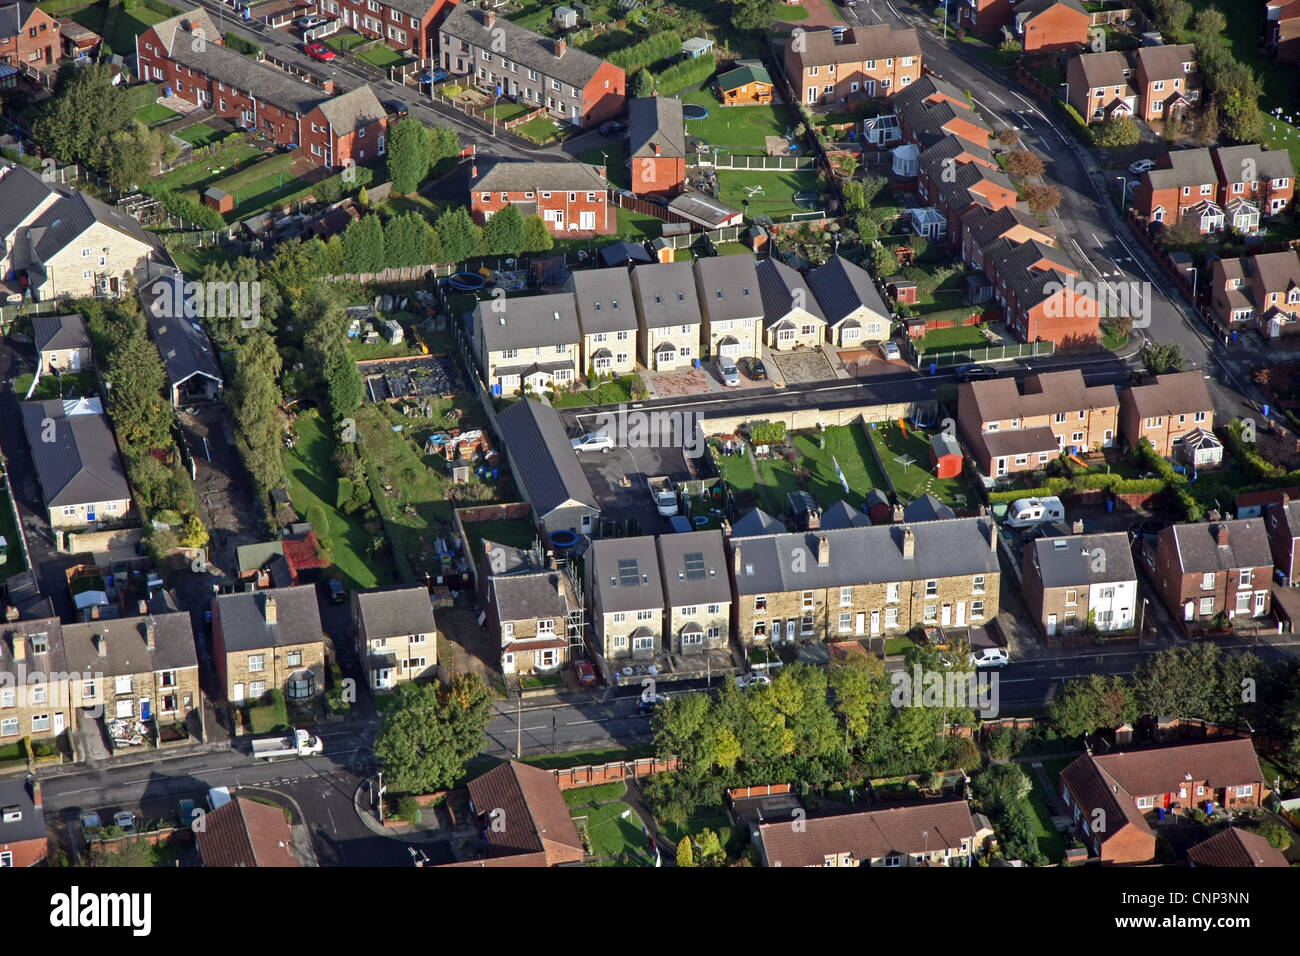 Vista aérea de asequibles viviendas construidas sobre un sitio de brown field entre casas antiguas existentes Foto de stock